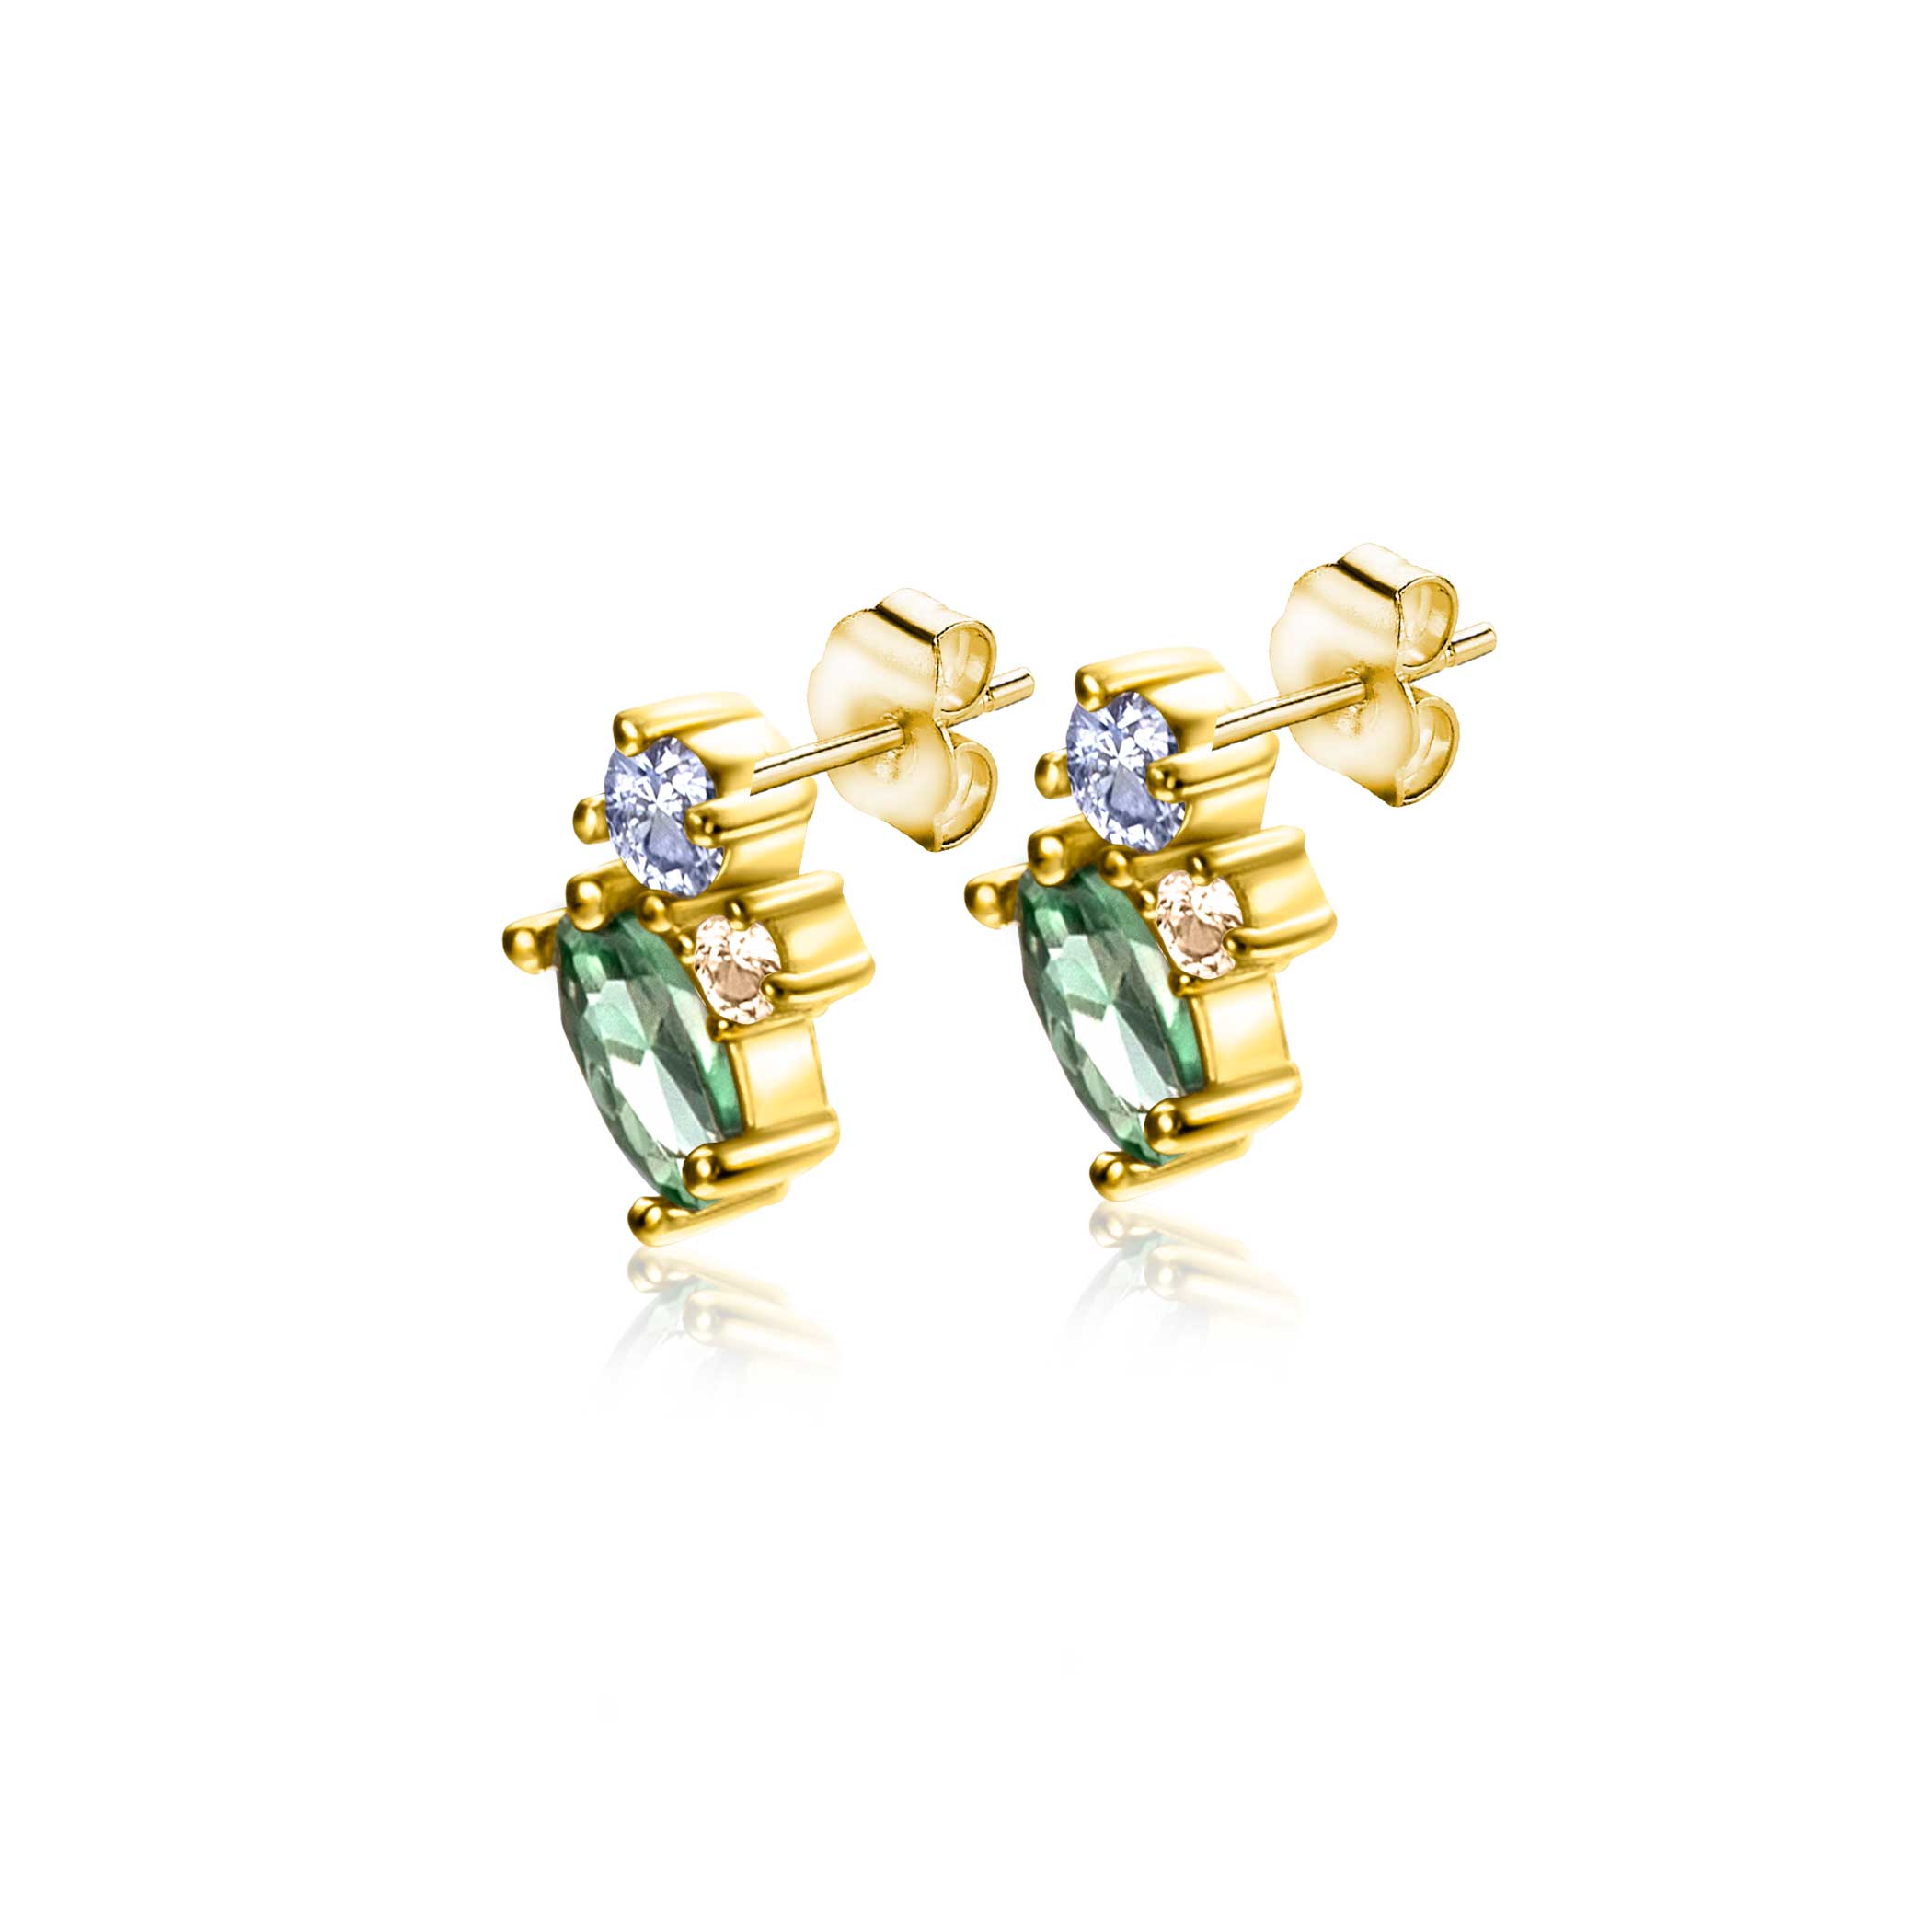 8mm ZINZI 14K Gold Fantasy Stud Earrings Champagne, Light Blue and Green Zirconias ZGO379